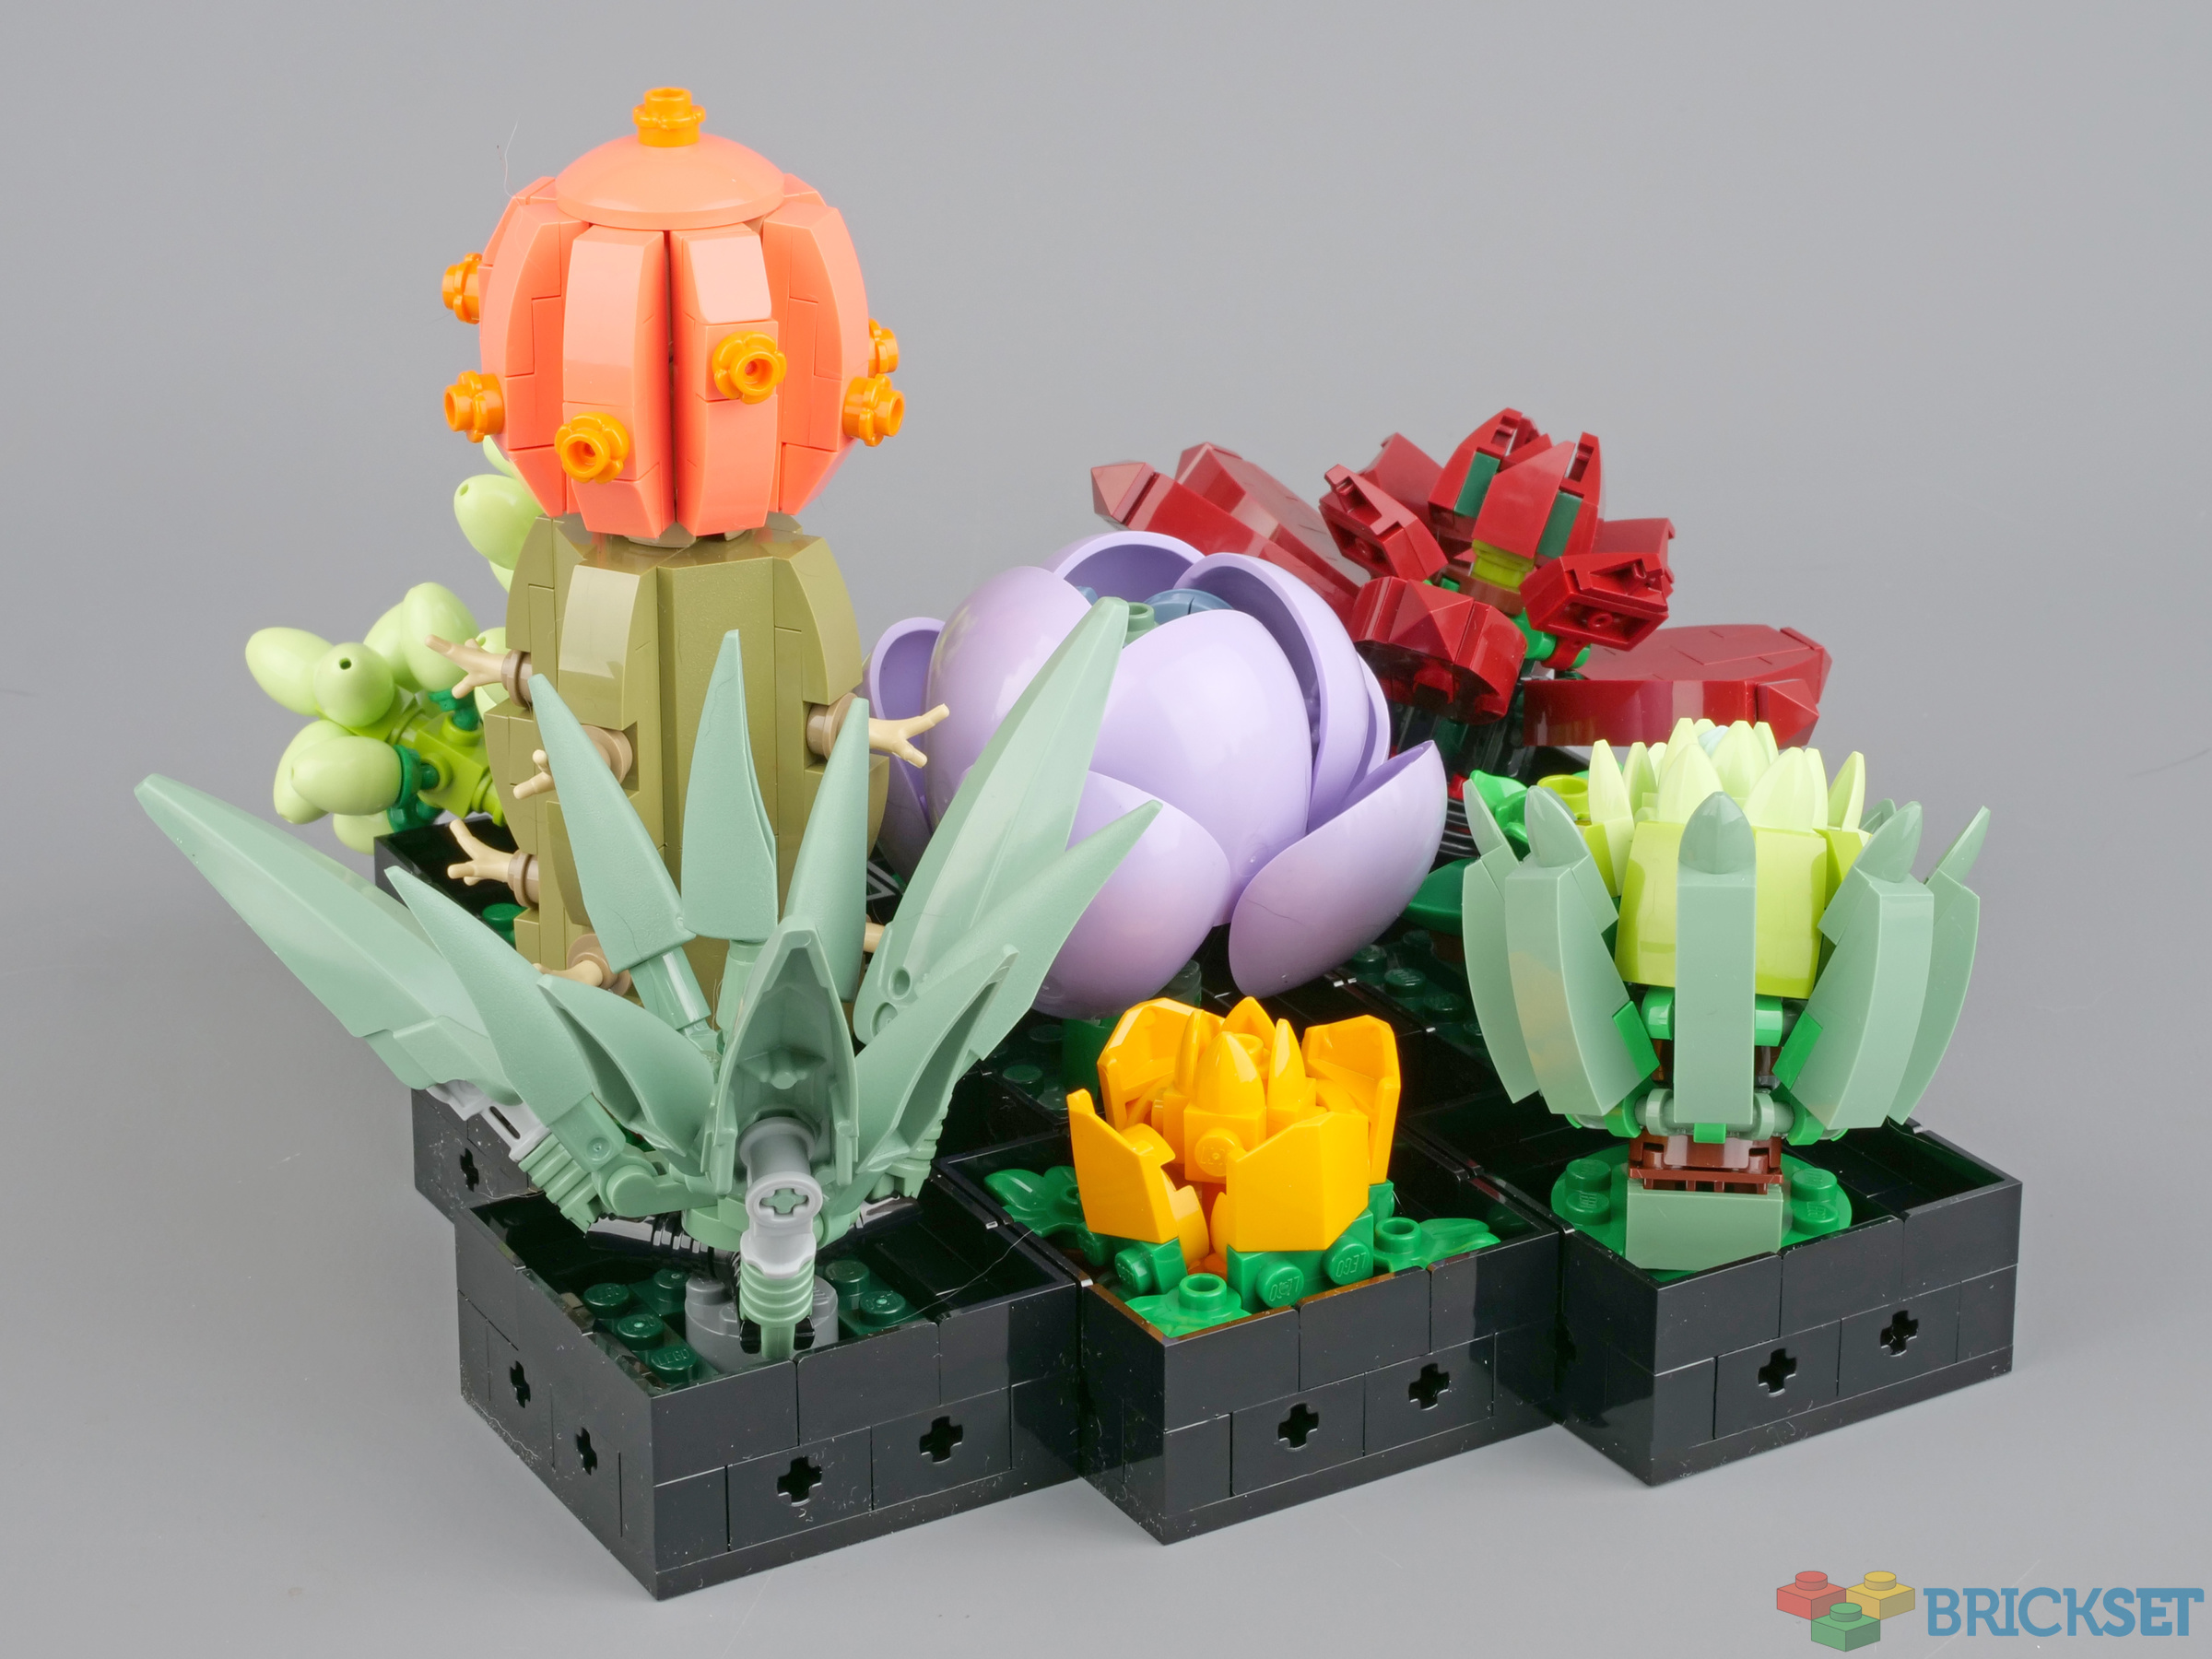 LEGO 10309 Succulents review | Brickset